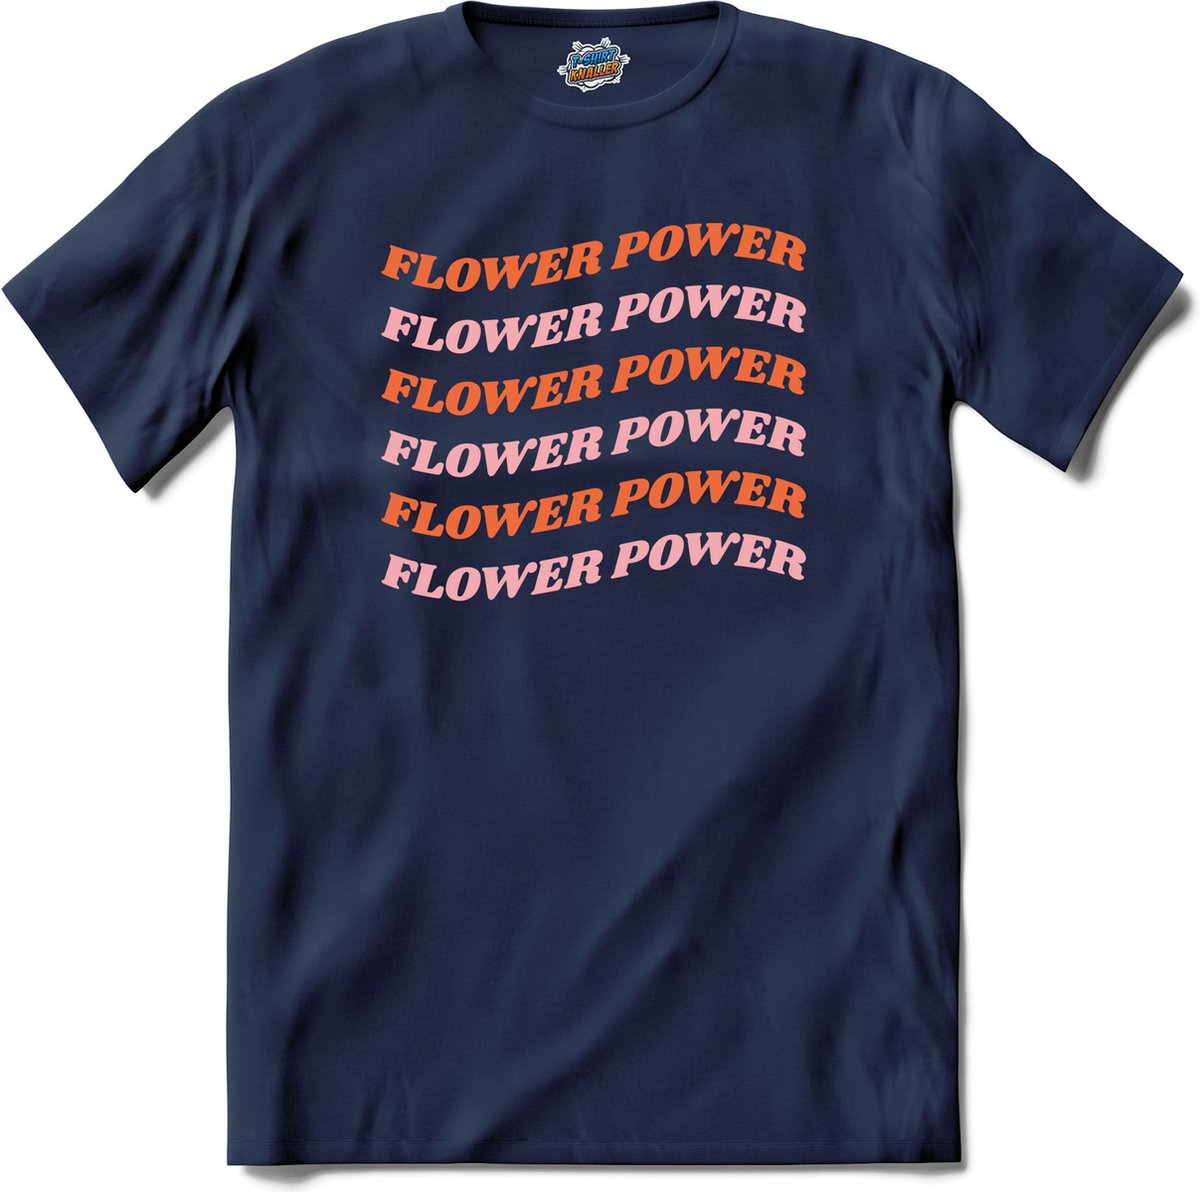 Flower power - T-Shirt - Meisjes - Navy Blue - Maat 10 jaar